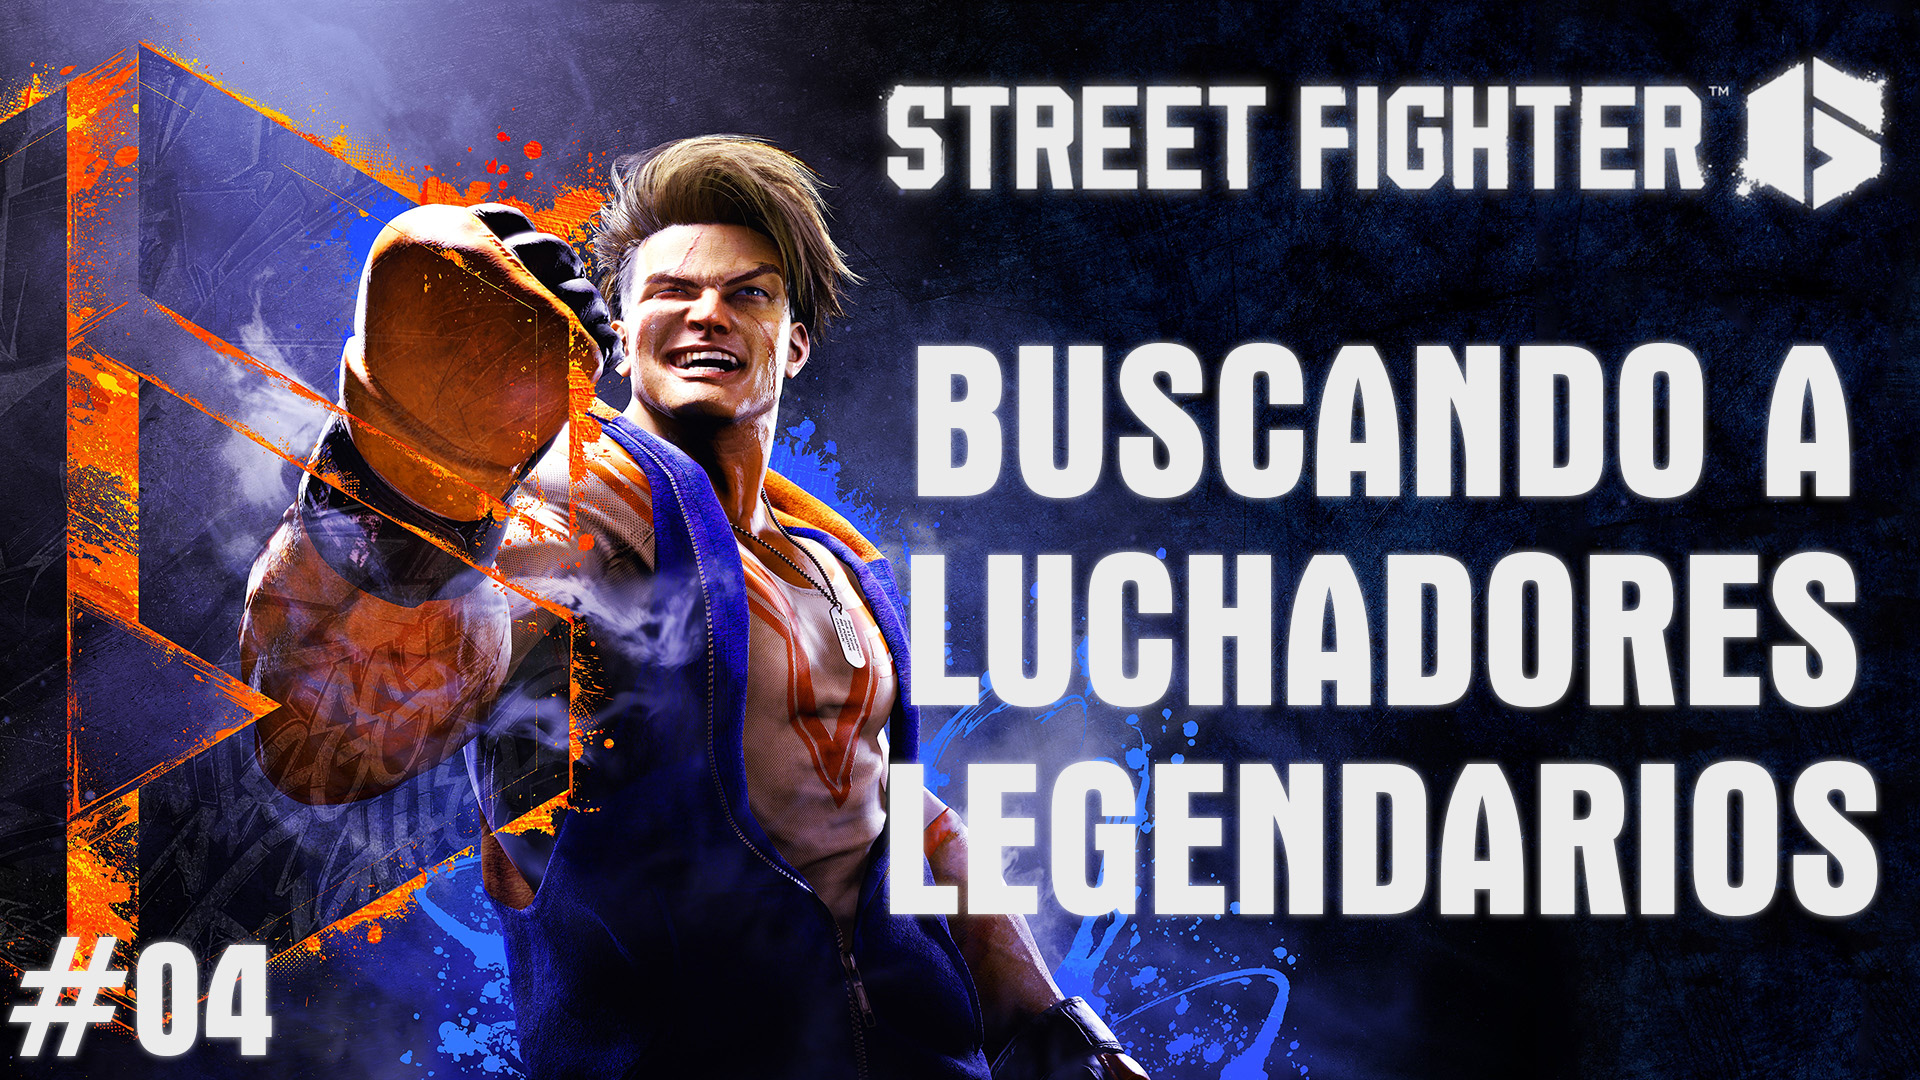 Serie Street Fighter 6 World Tour 4 – Buscando a luchadores legendarios